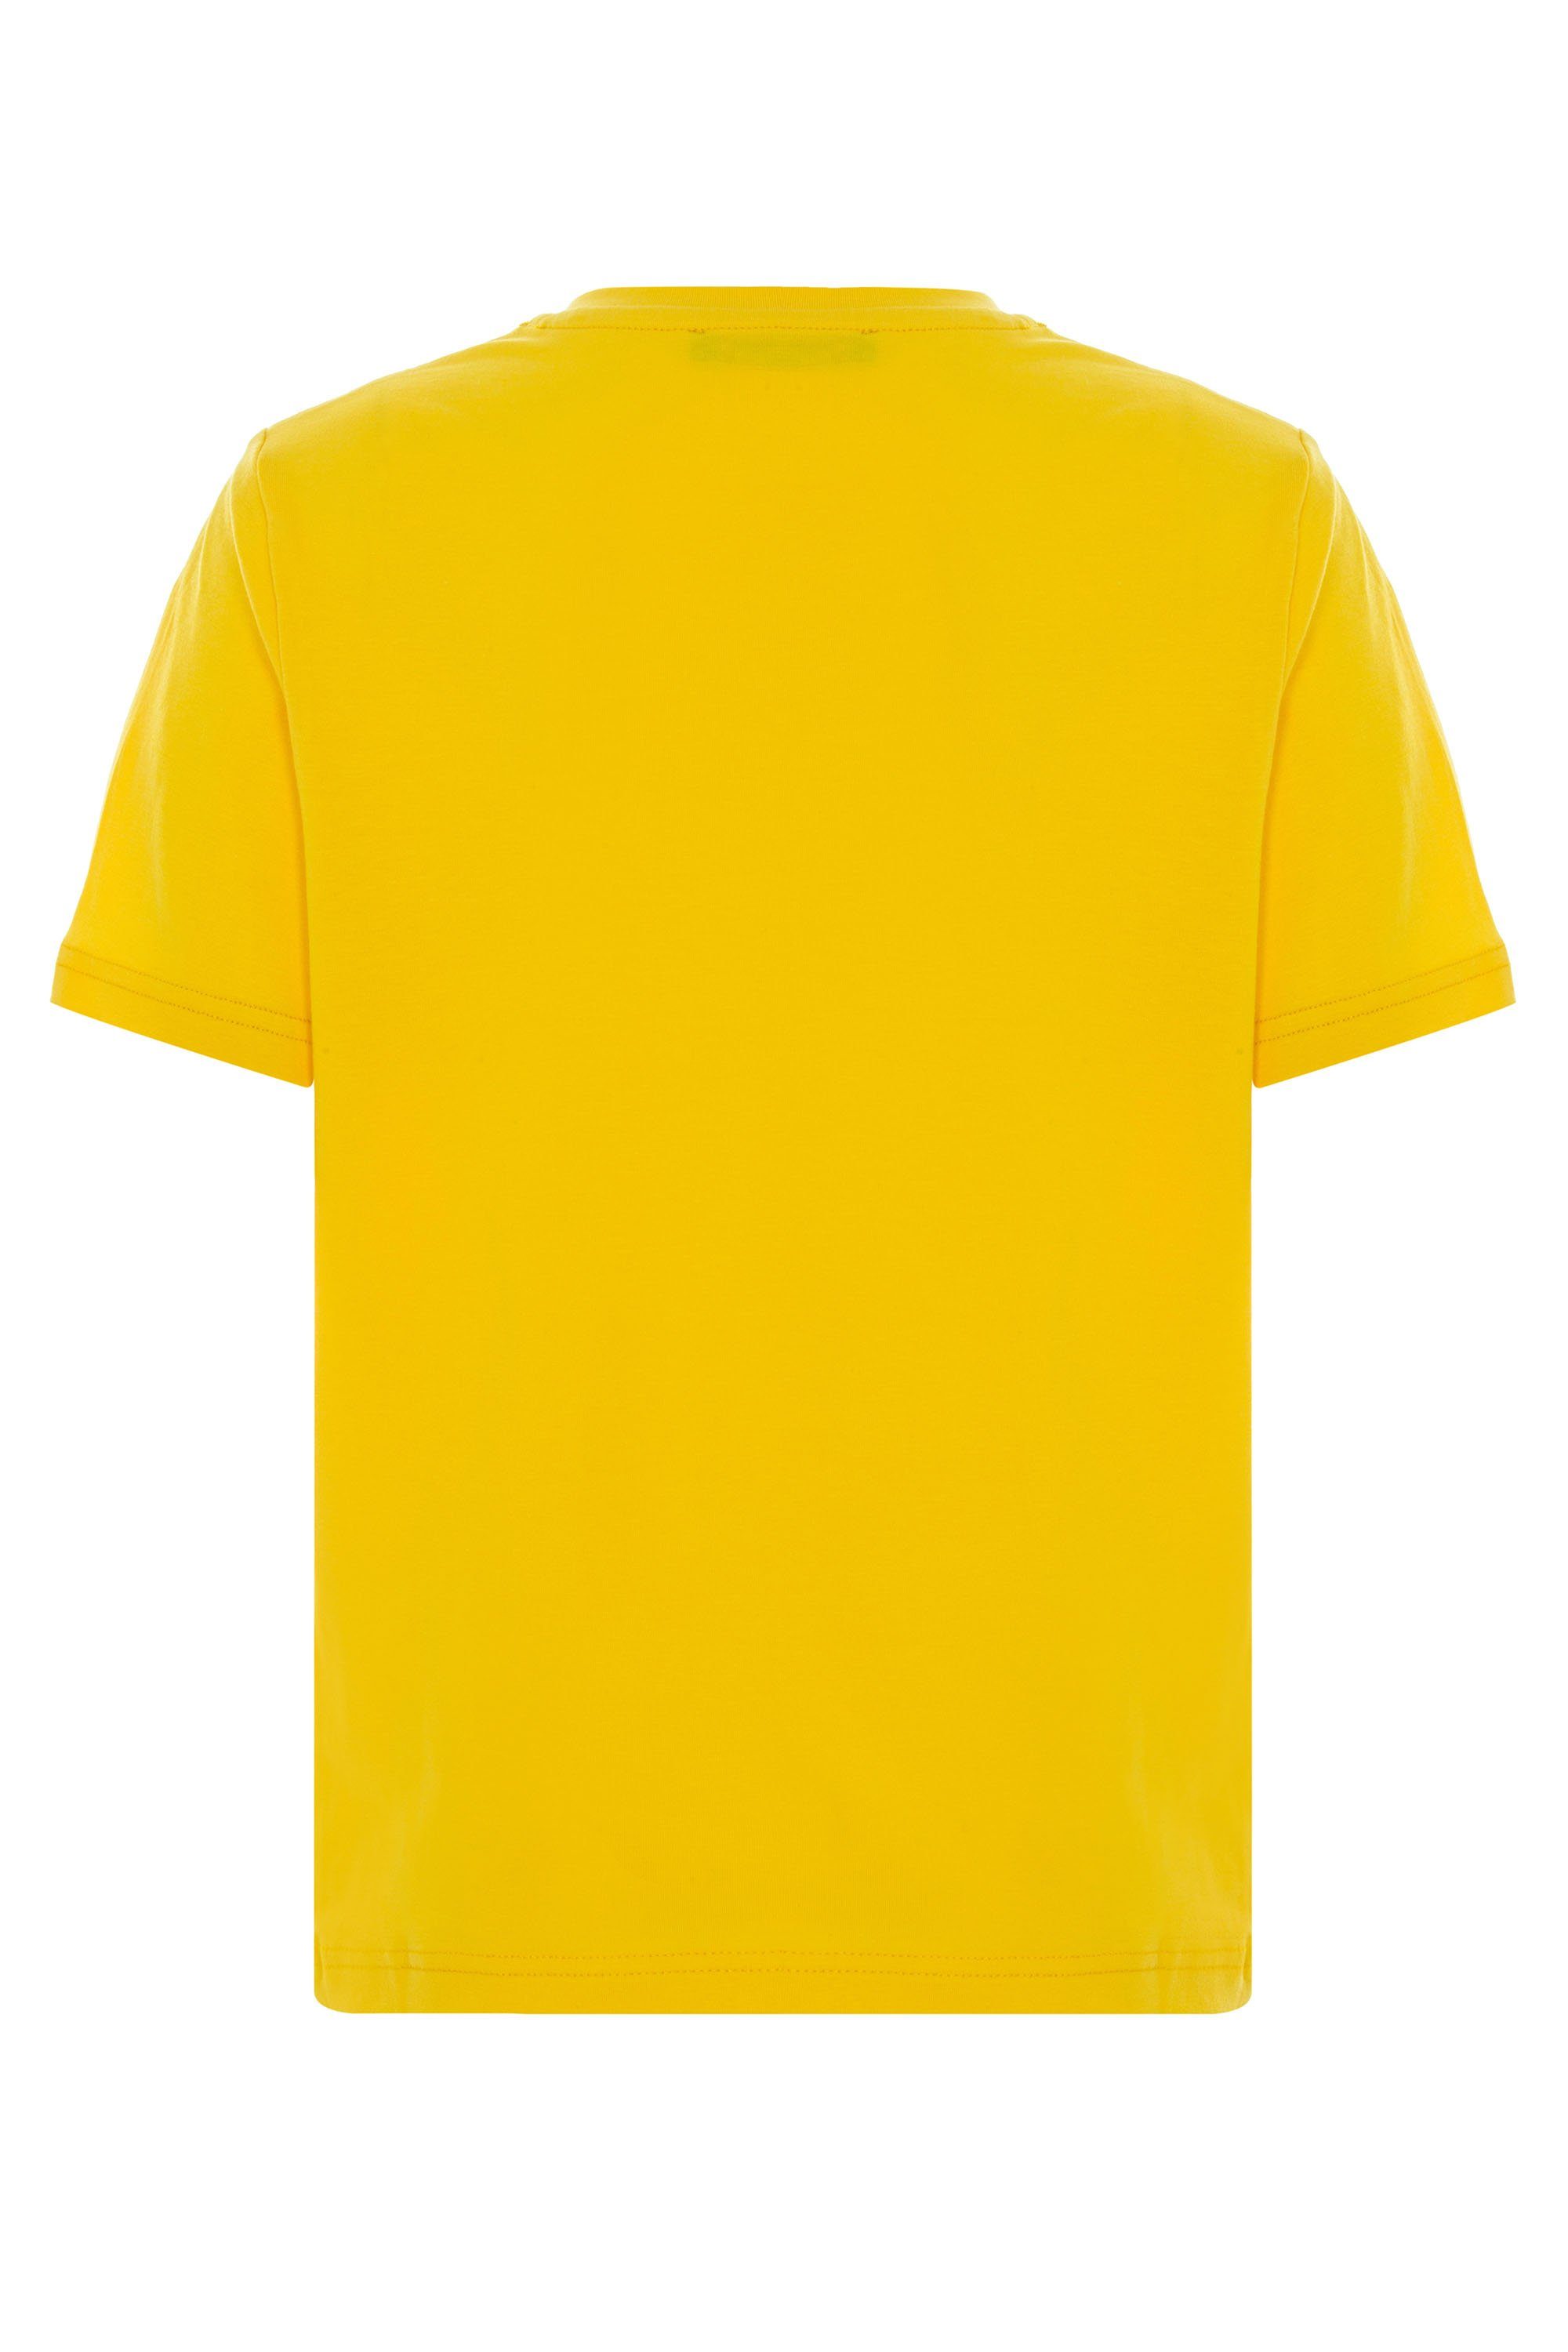 mit & Baxx coolem Print gelb-schwarz T-Shirt Cipo